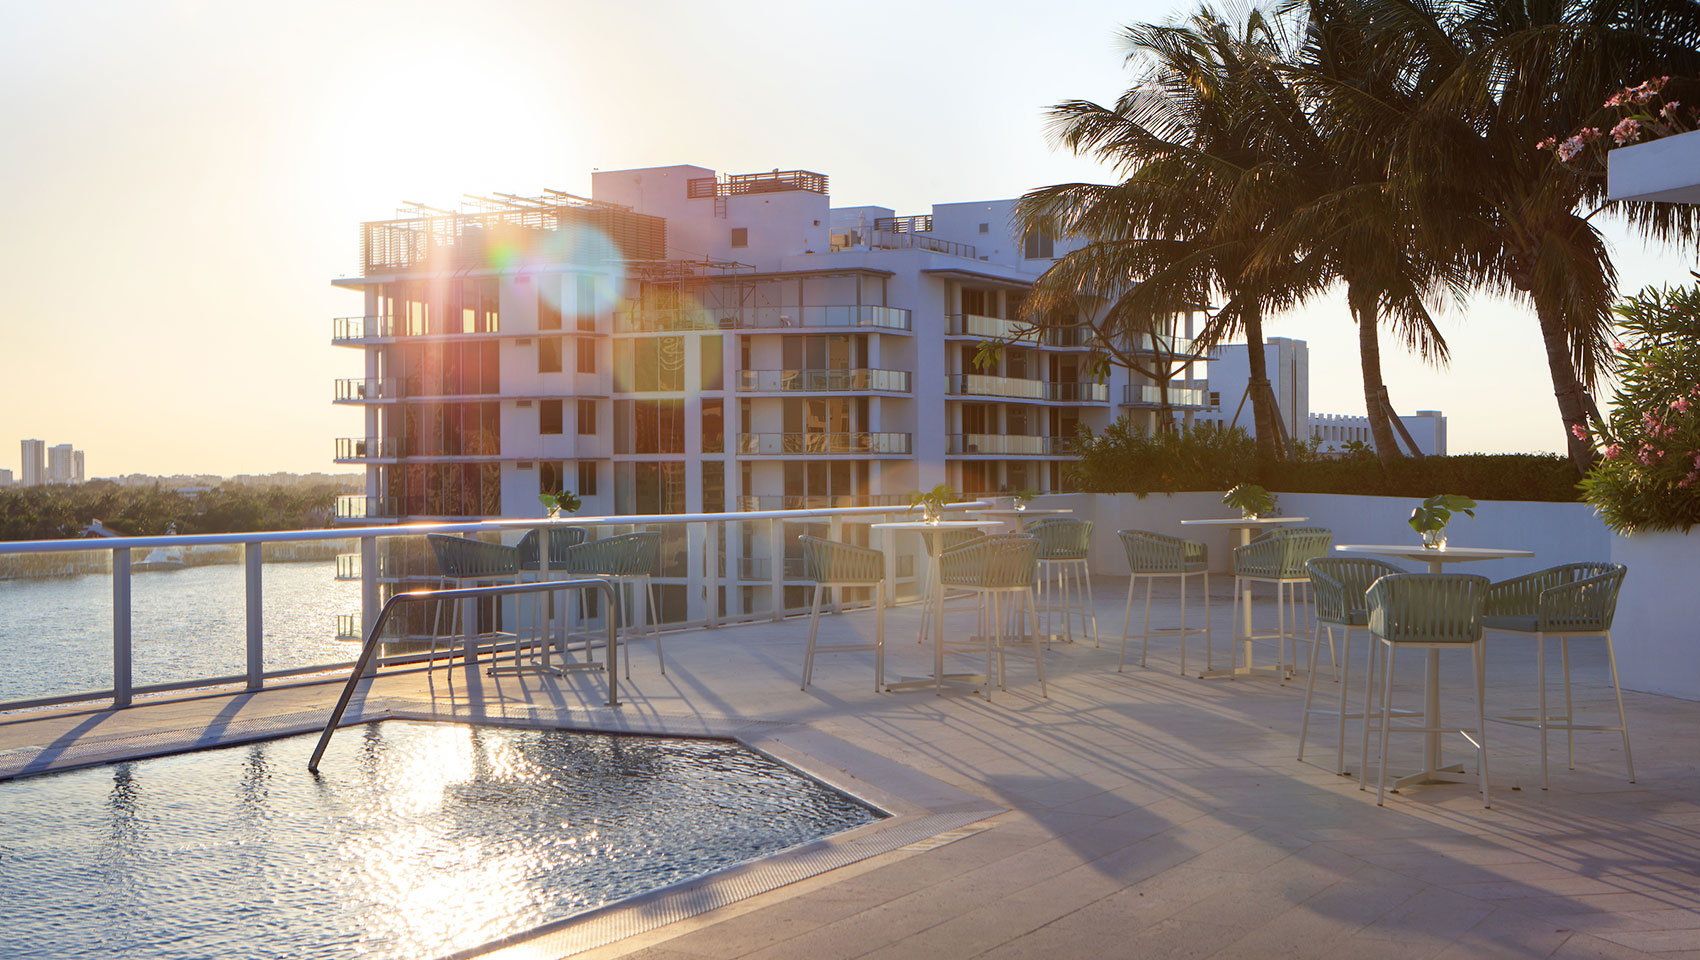 Shorebreak Fort Lauderdale Beach Resort rooftop pool